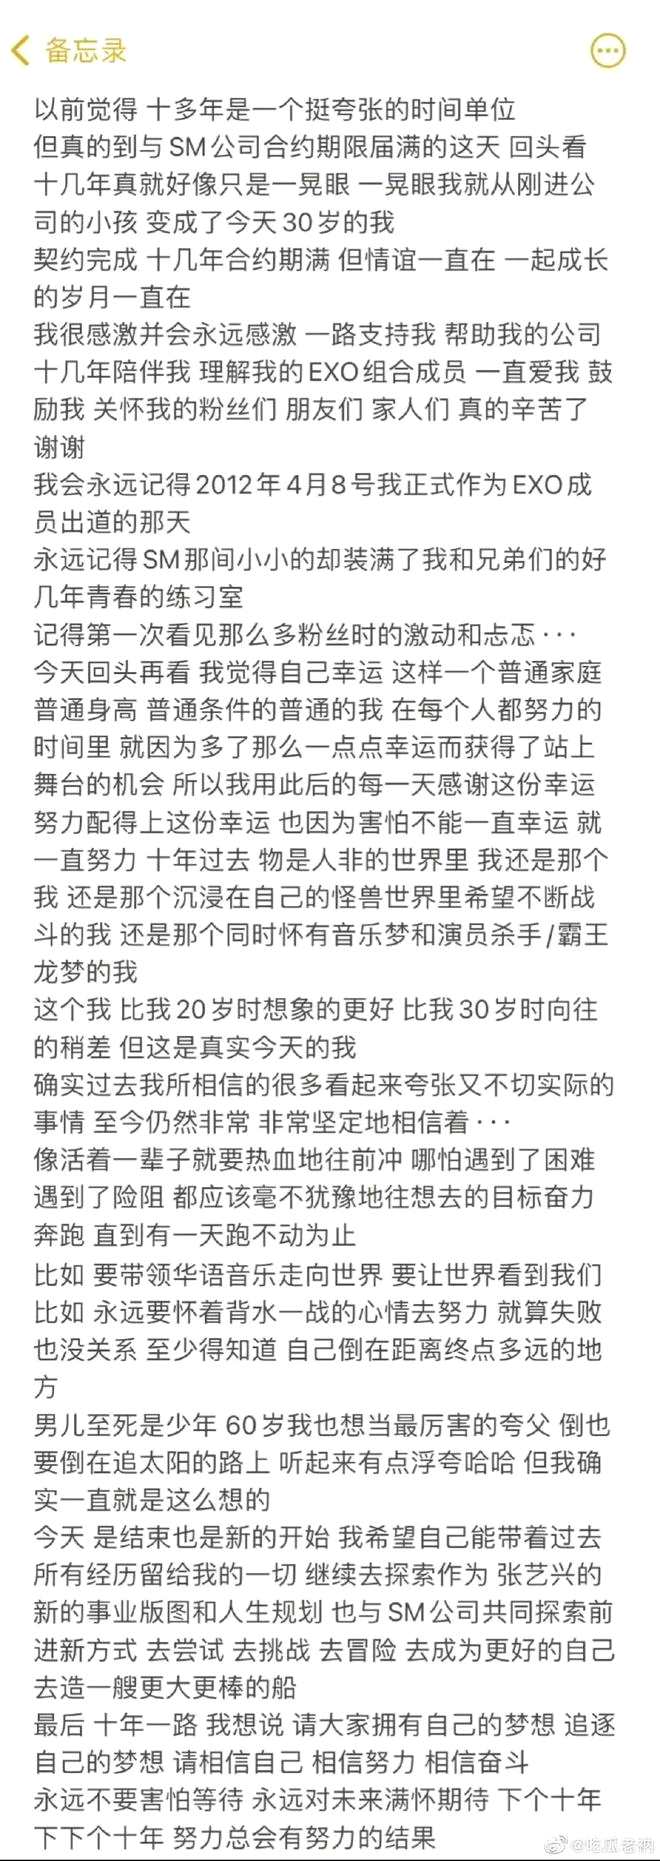 SM官方宣传张艺兴演唱会 此前合约到期未续约